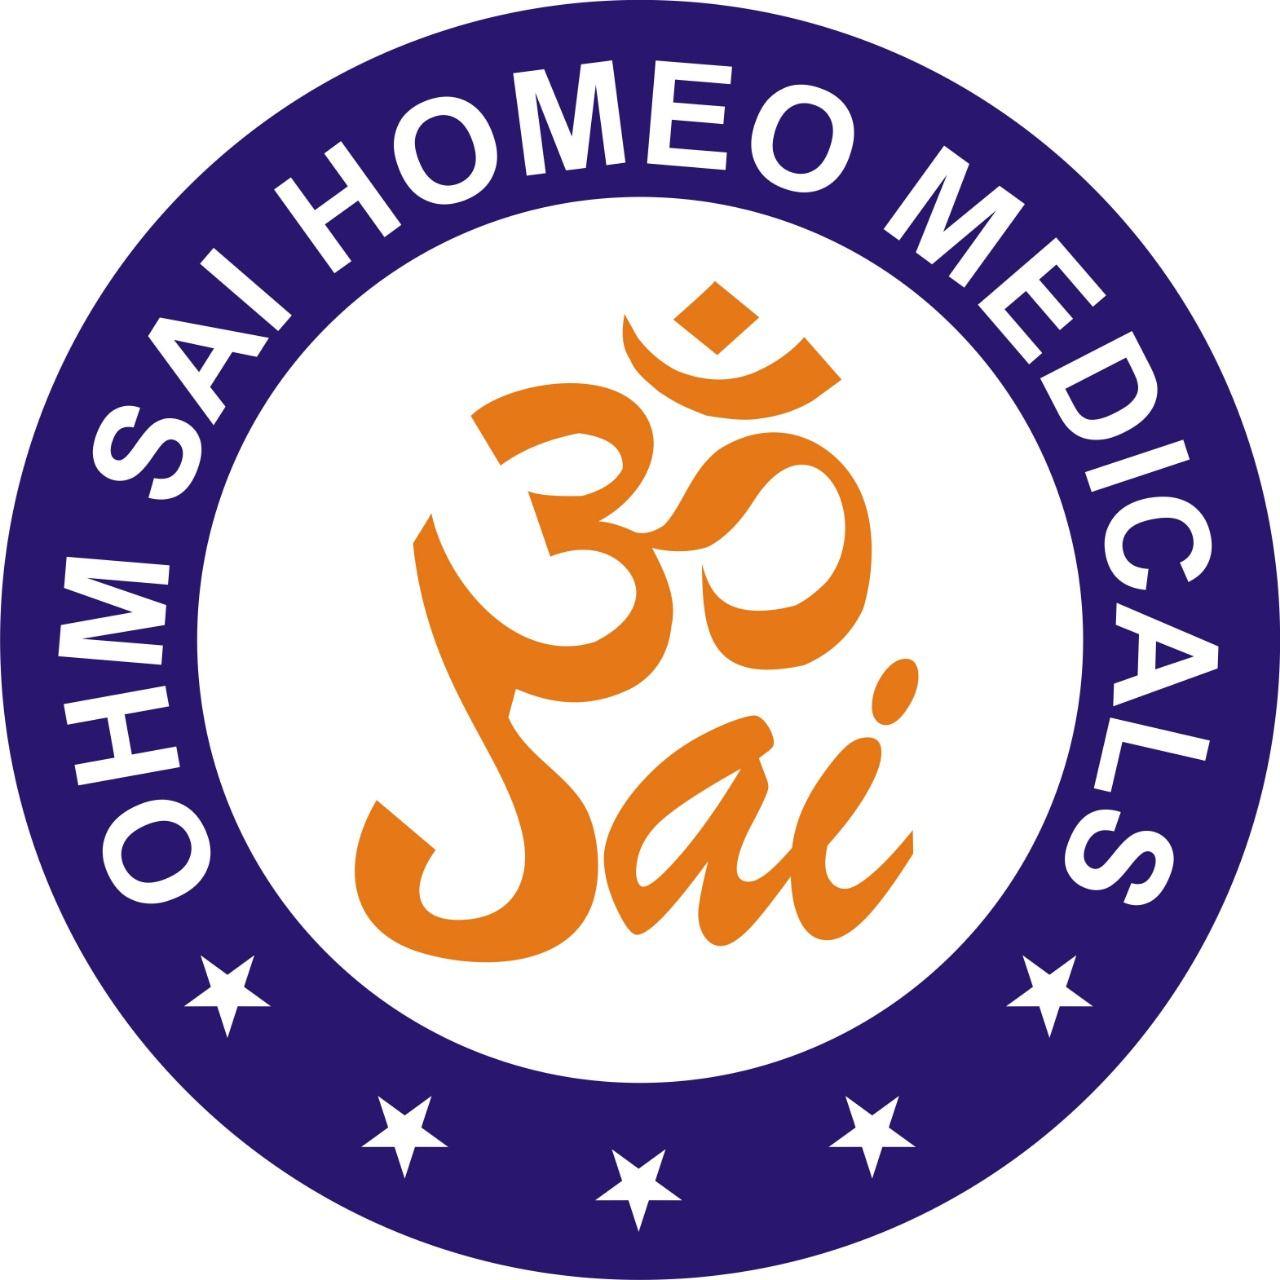 ORIGINAL HOMOEO MEDICALS